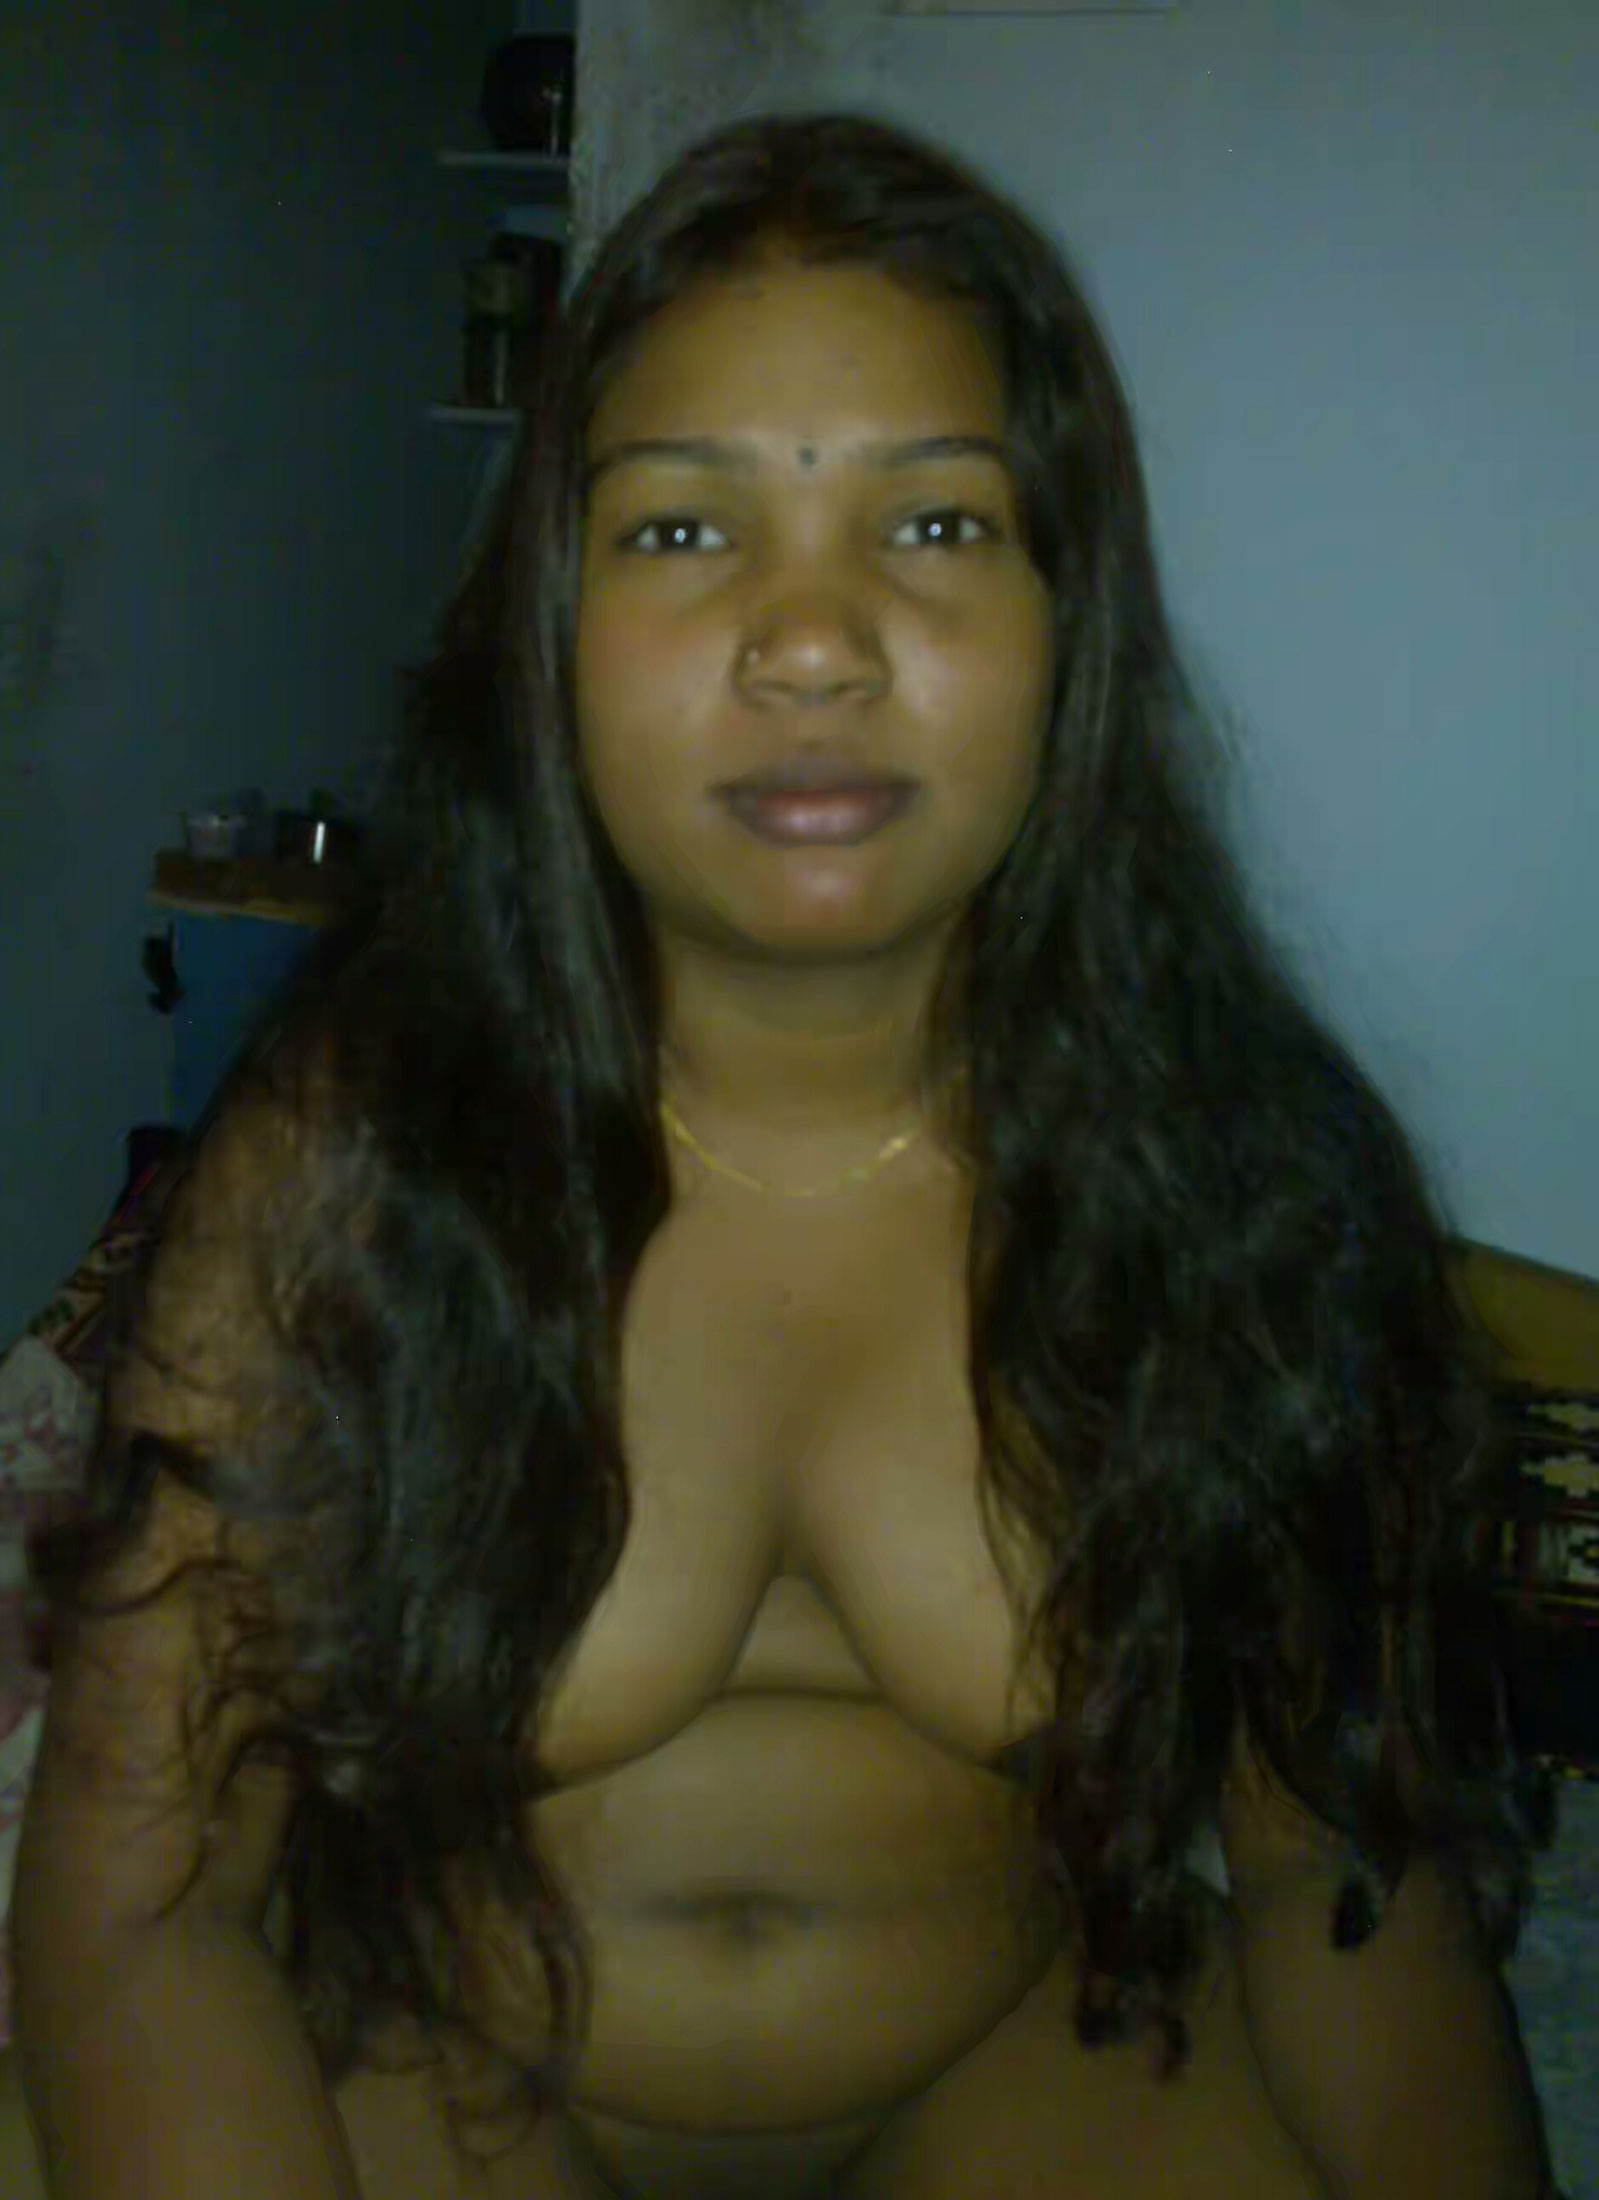 Horny Full Nude Indian Hotties Arousing Amateur Pics